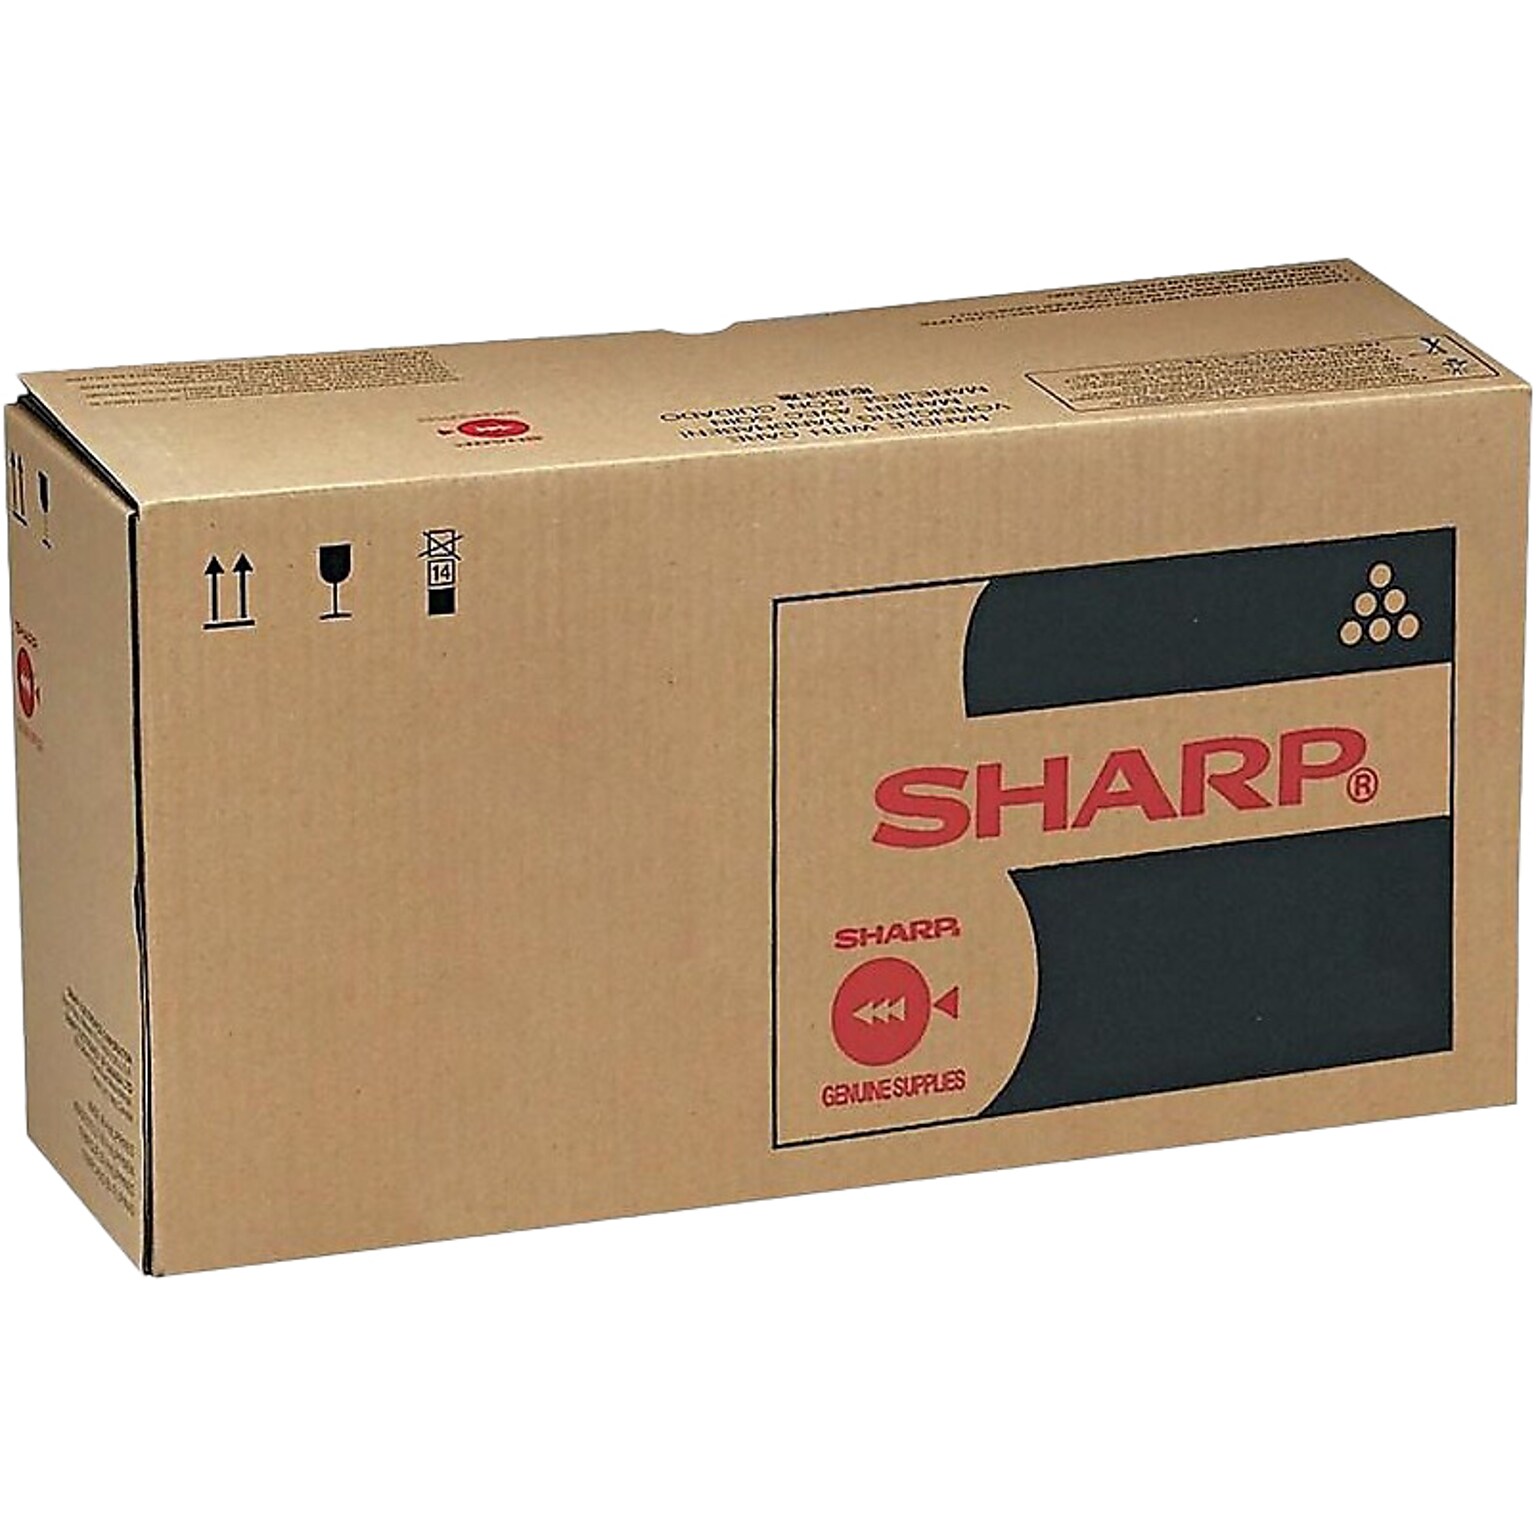 Sharp MX-560DR Black Standard Yield Drum